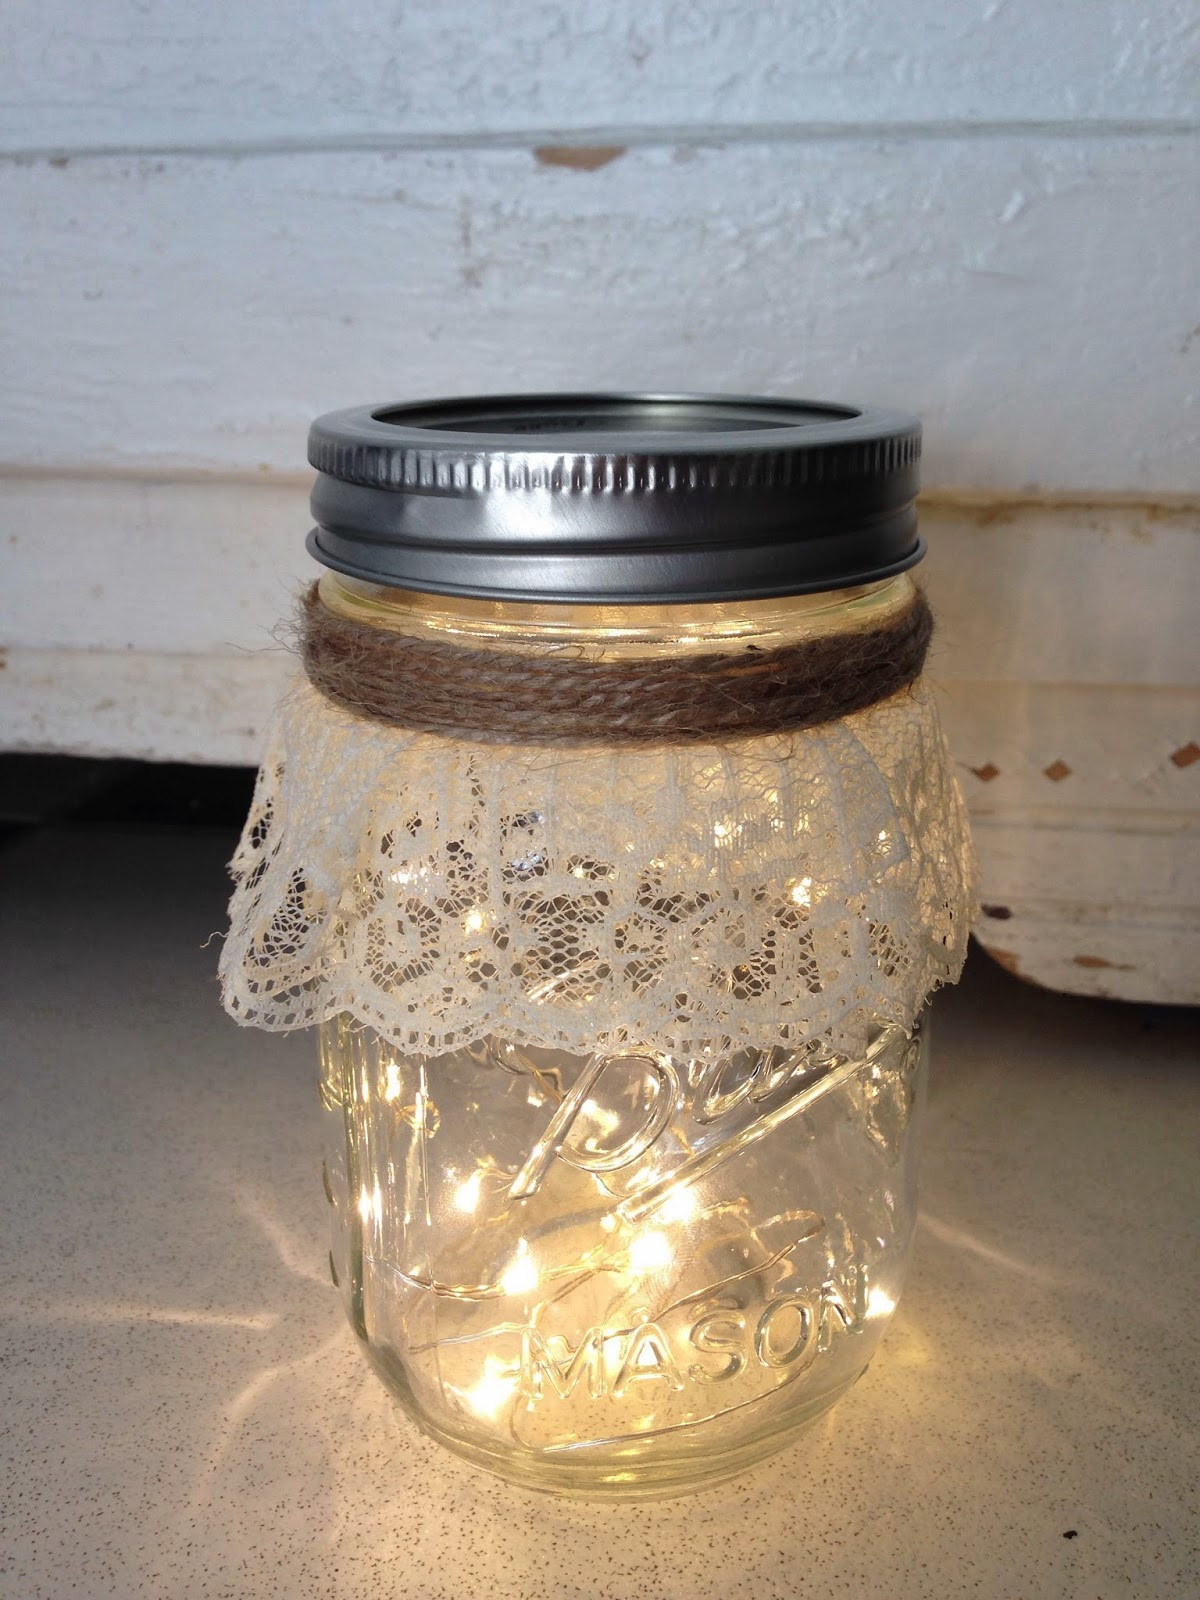 Best ideas about Mason Jar Fairy Lights DIY
. Save or Pin Life as a Junicorn DIY Fairy Light Mason Jar Nightlight Now.